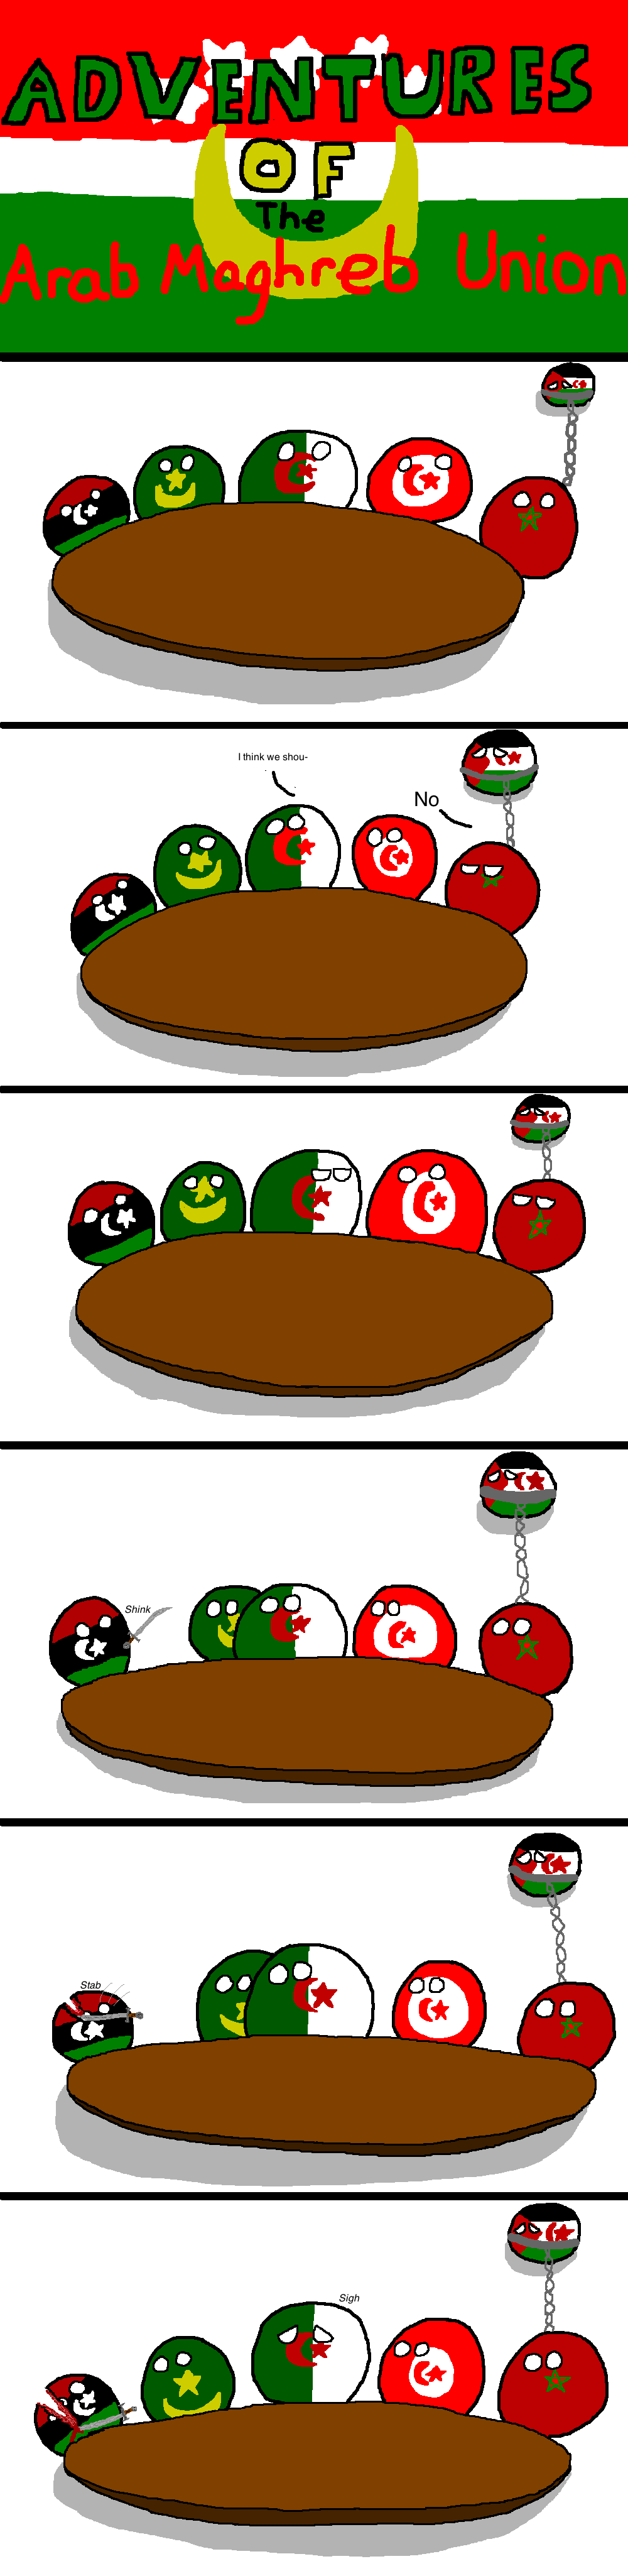 country-balls-arab-union